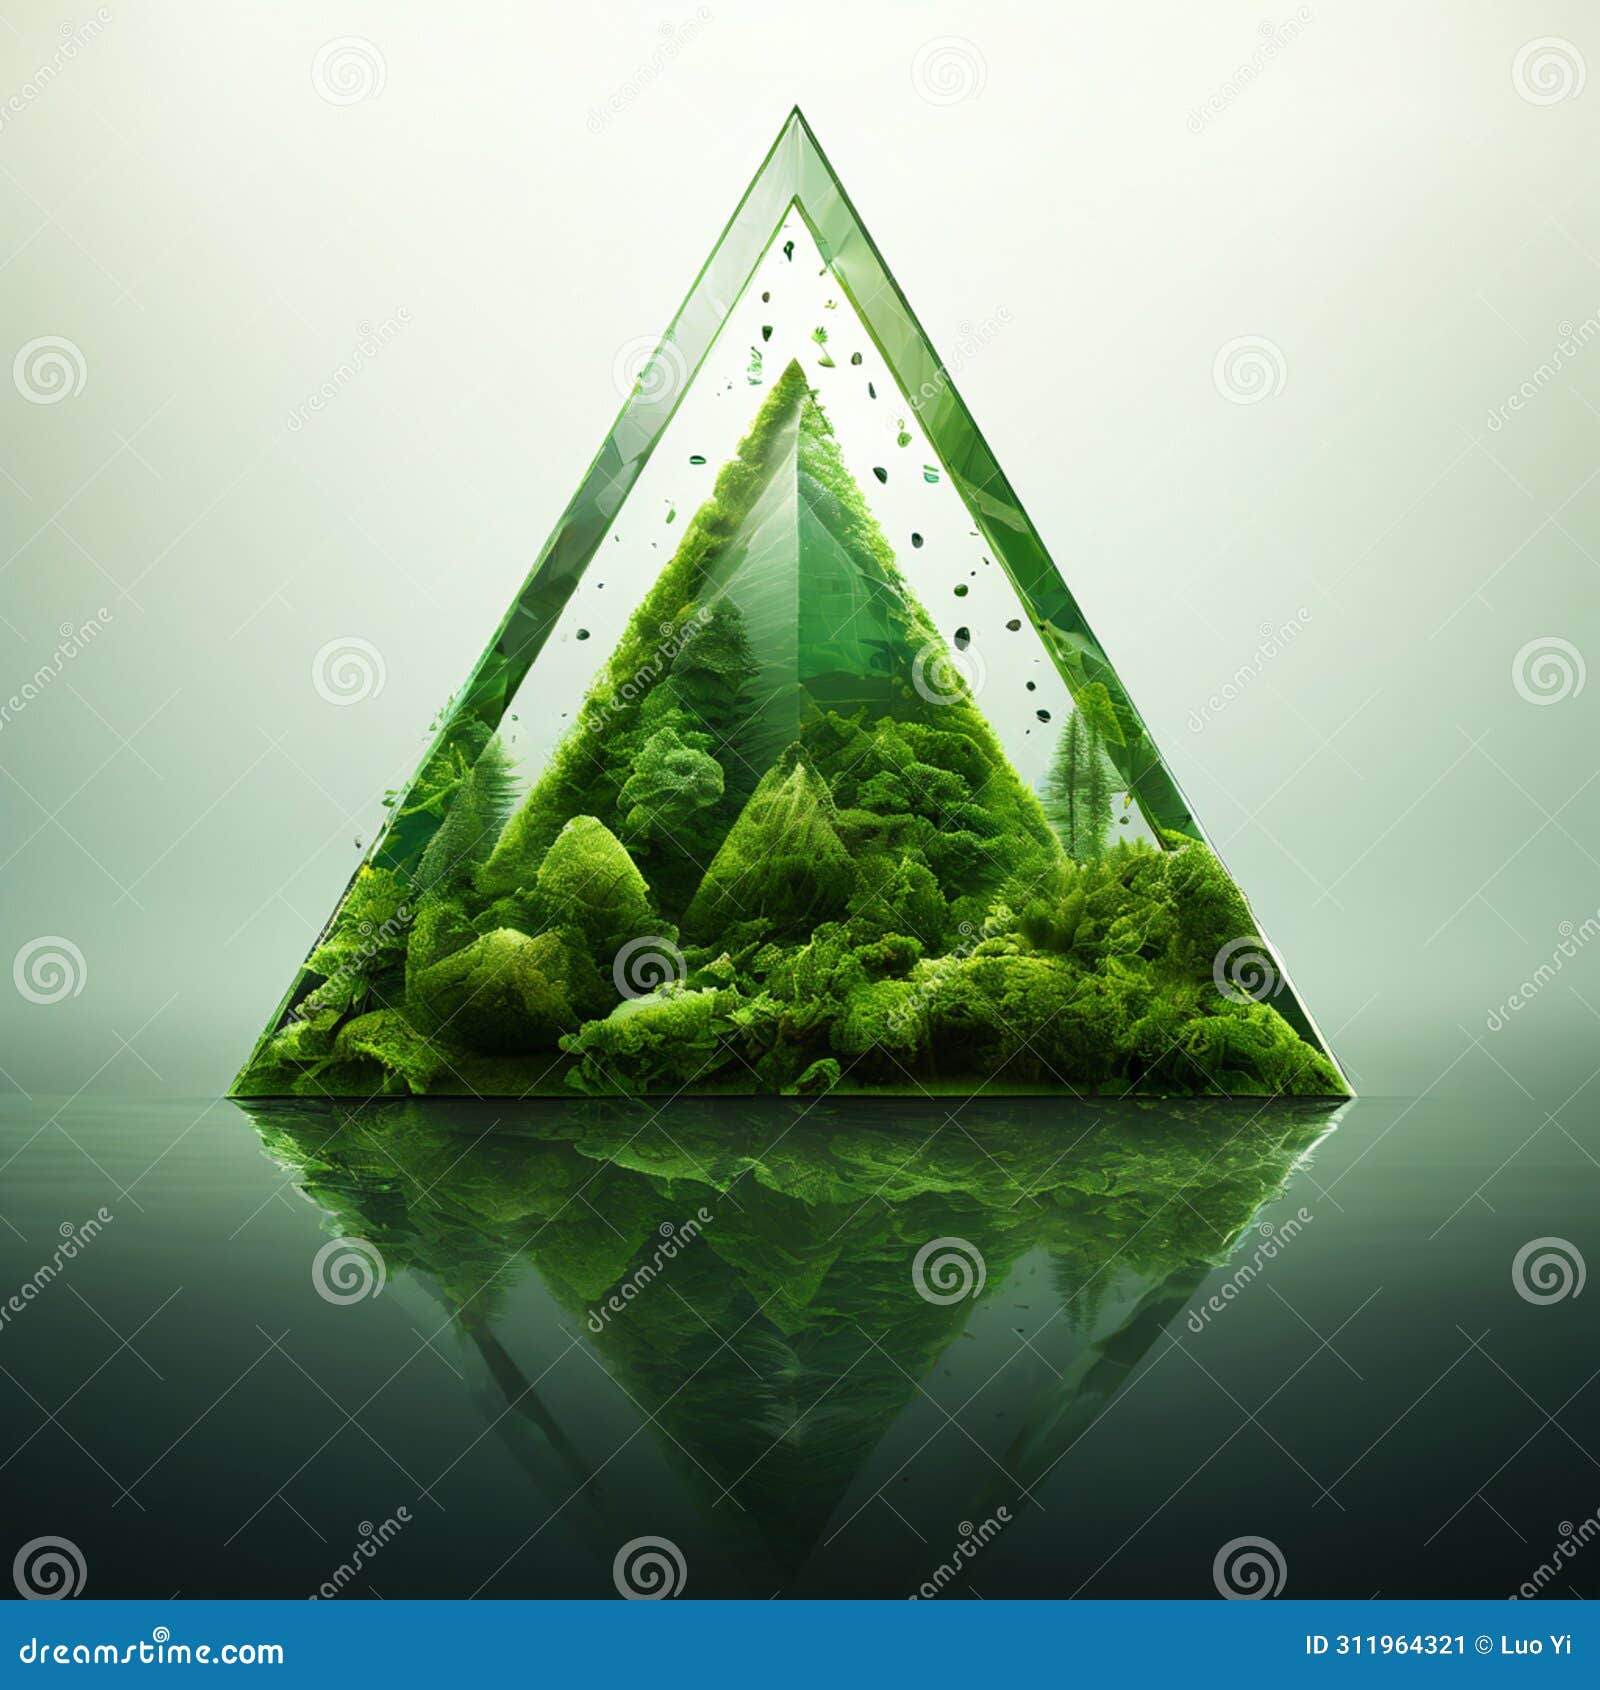 green energy triangle